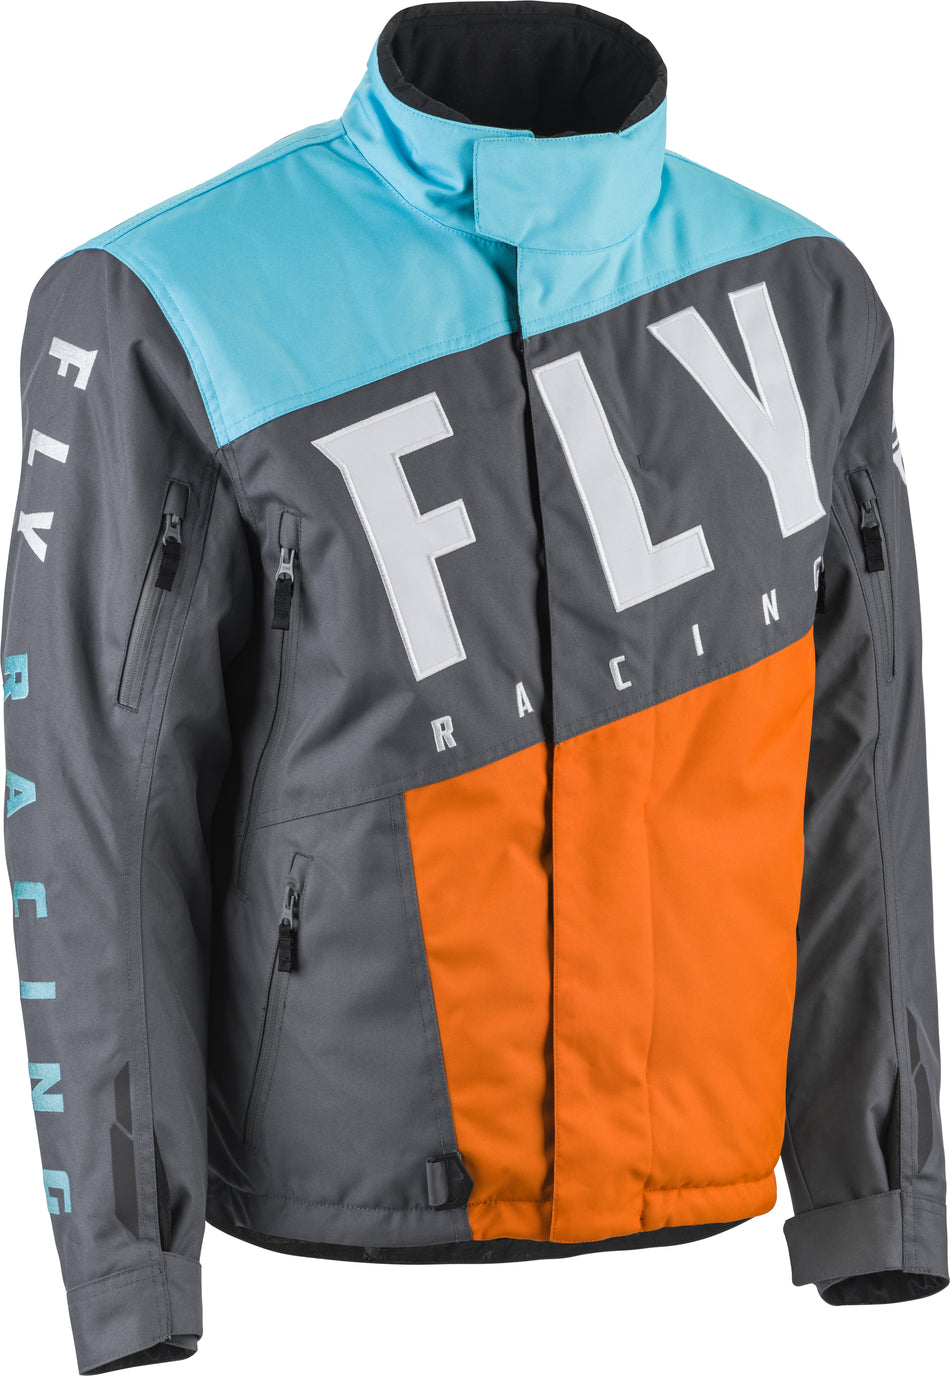 FLY RACING Snx Pro Jacket Orange/Light Blue/Black 3x 470-41143X